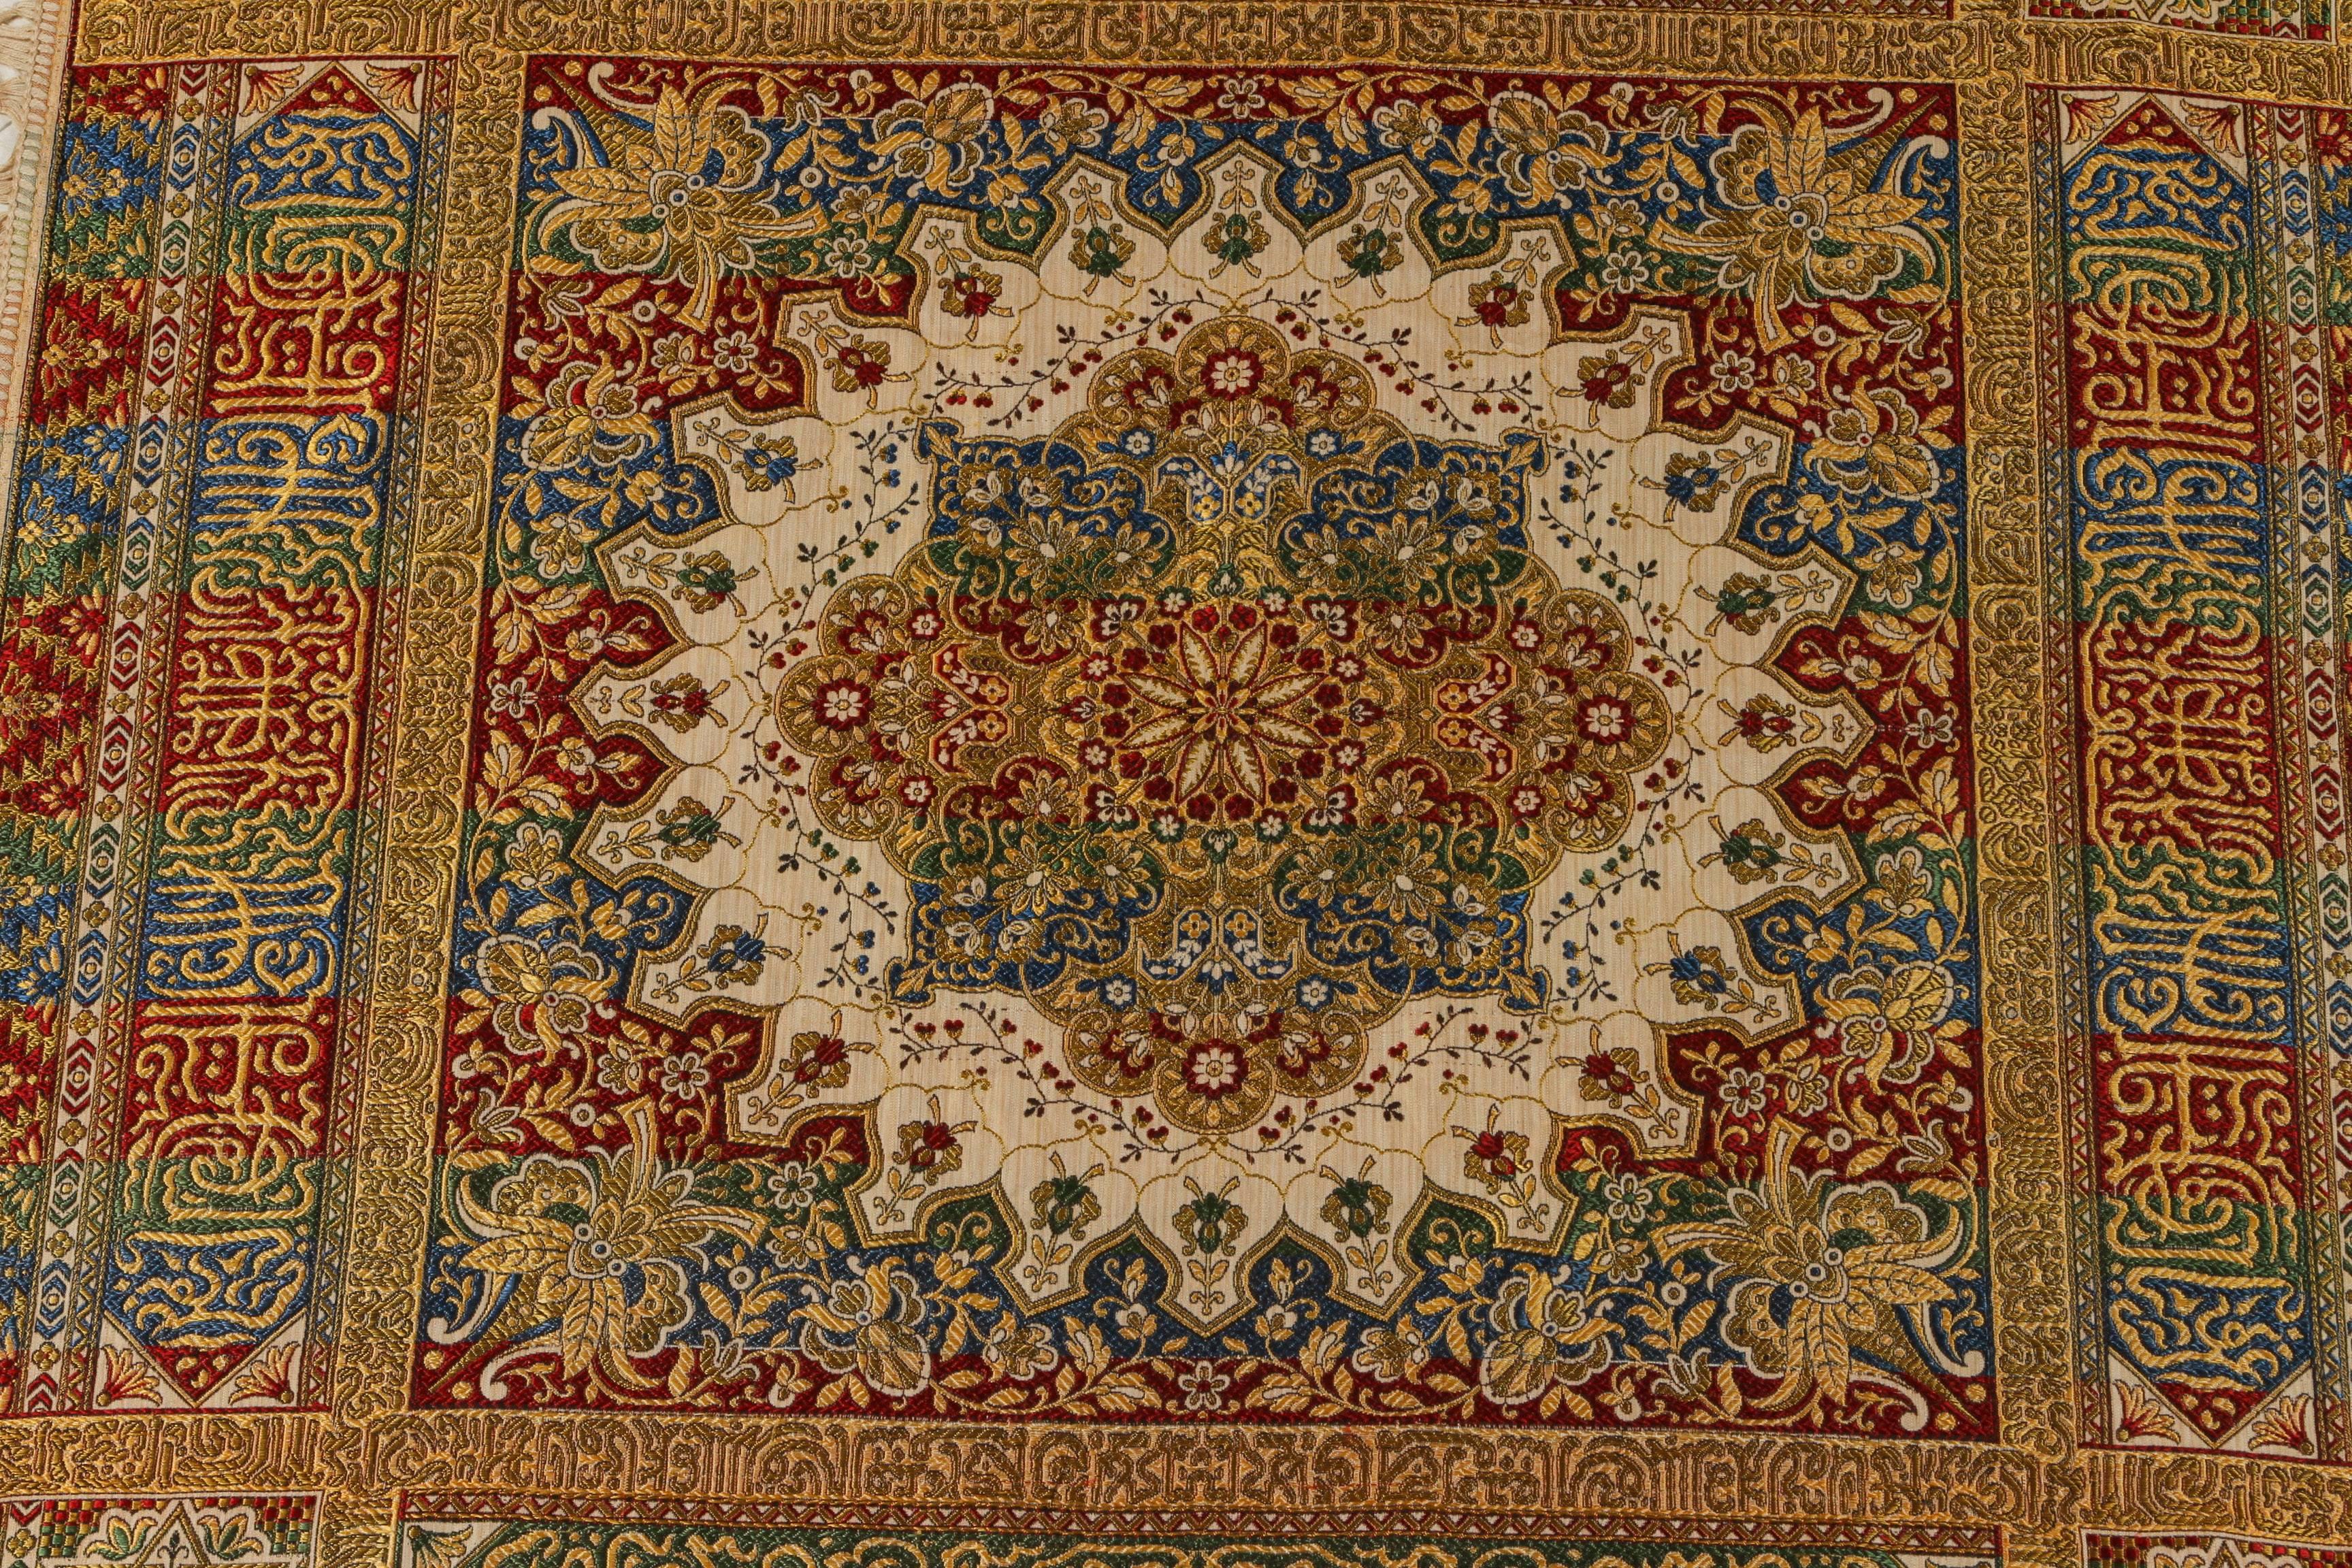 20th Century Granada Islamic Spain Textile with Moorish Calligraphy Writing